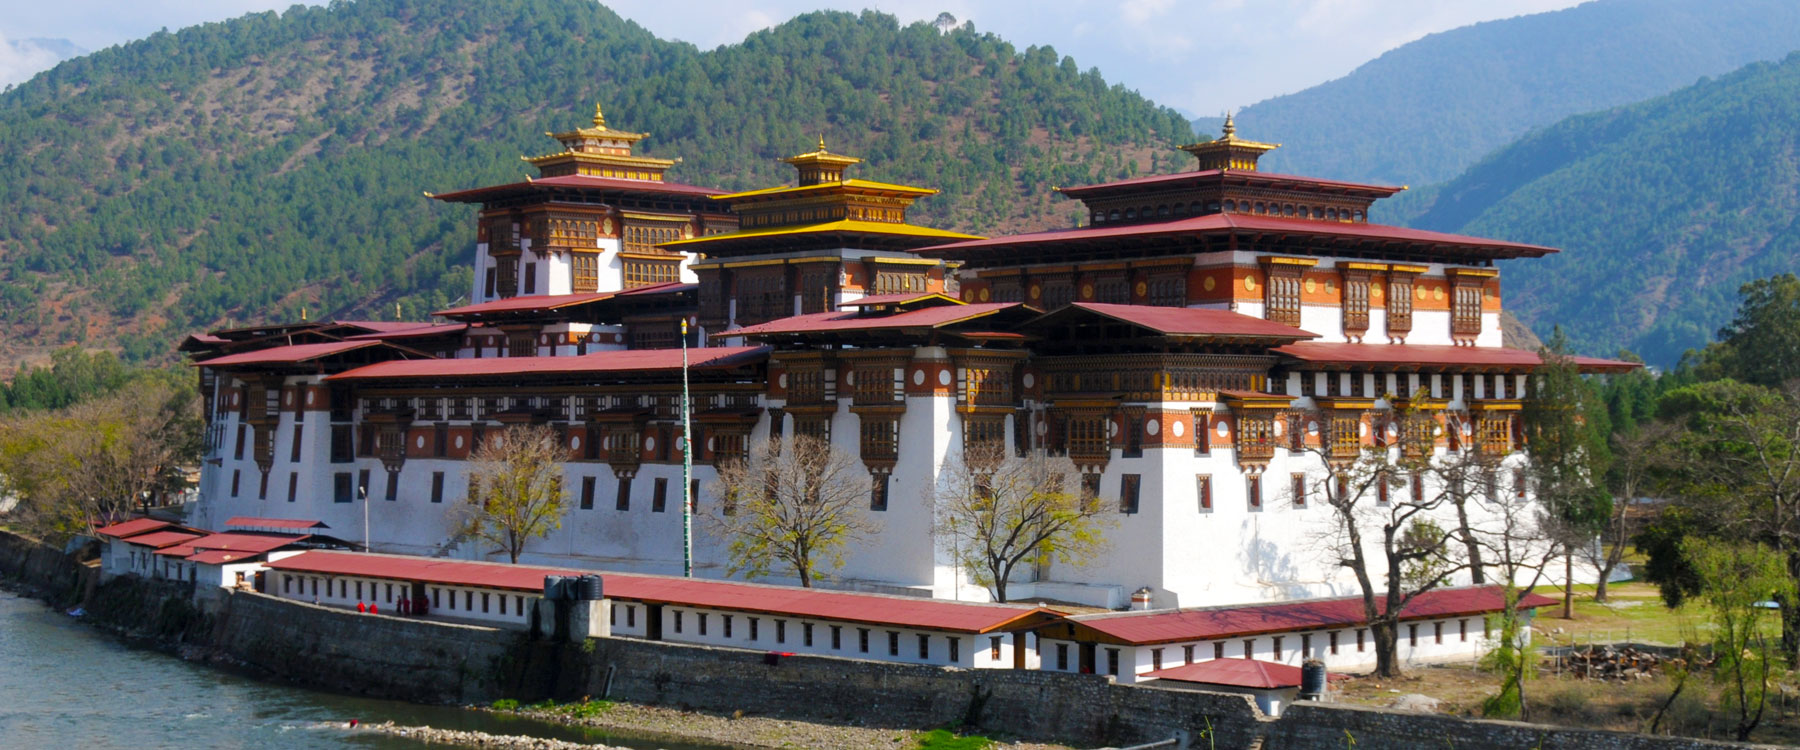 bhutan-nepal-by-mount-adventure-holidays-1.jpg